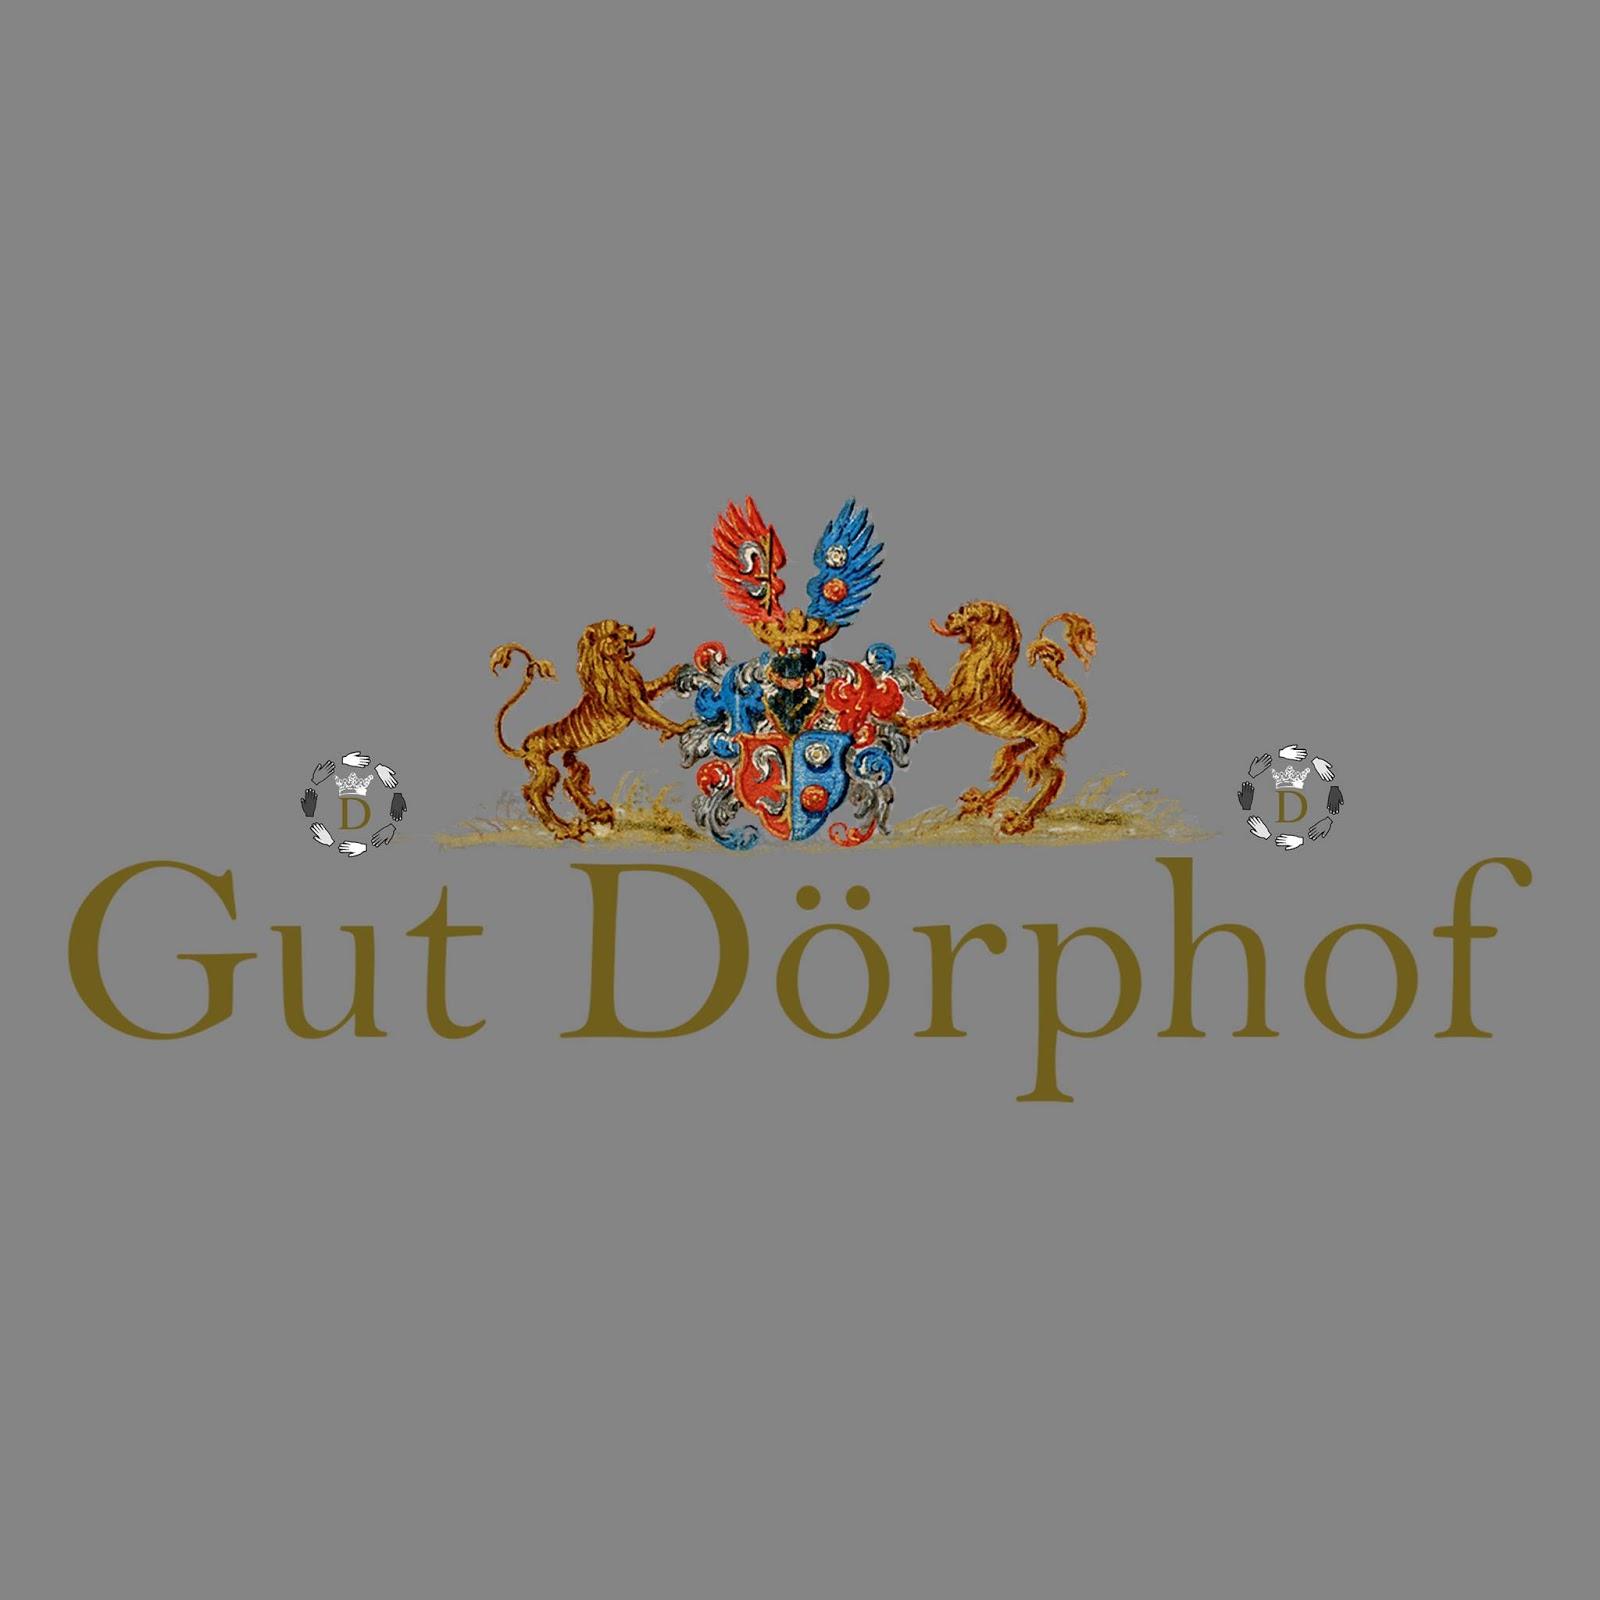 Restaurant "Hofverwaltung Gut" in Dörphof